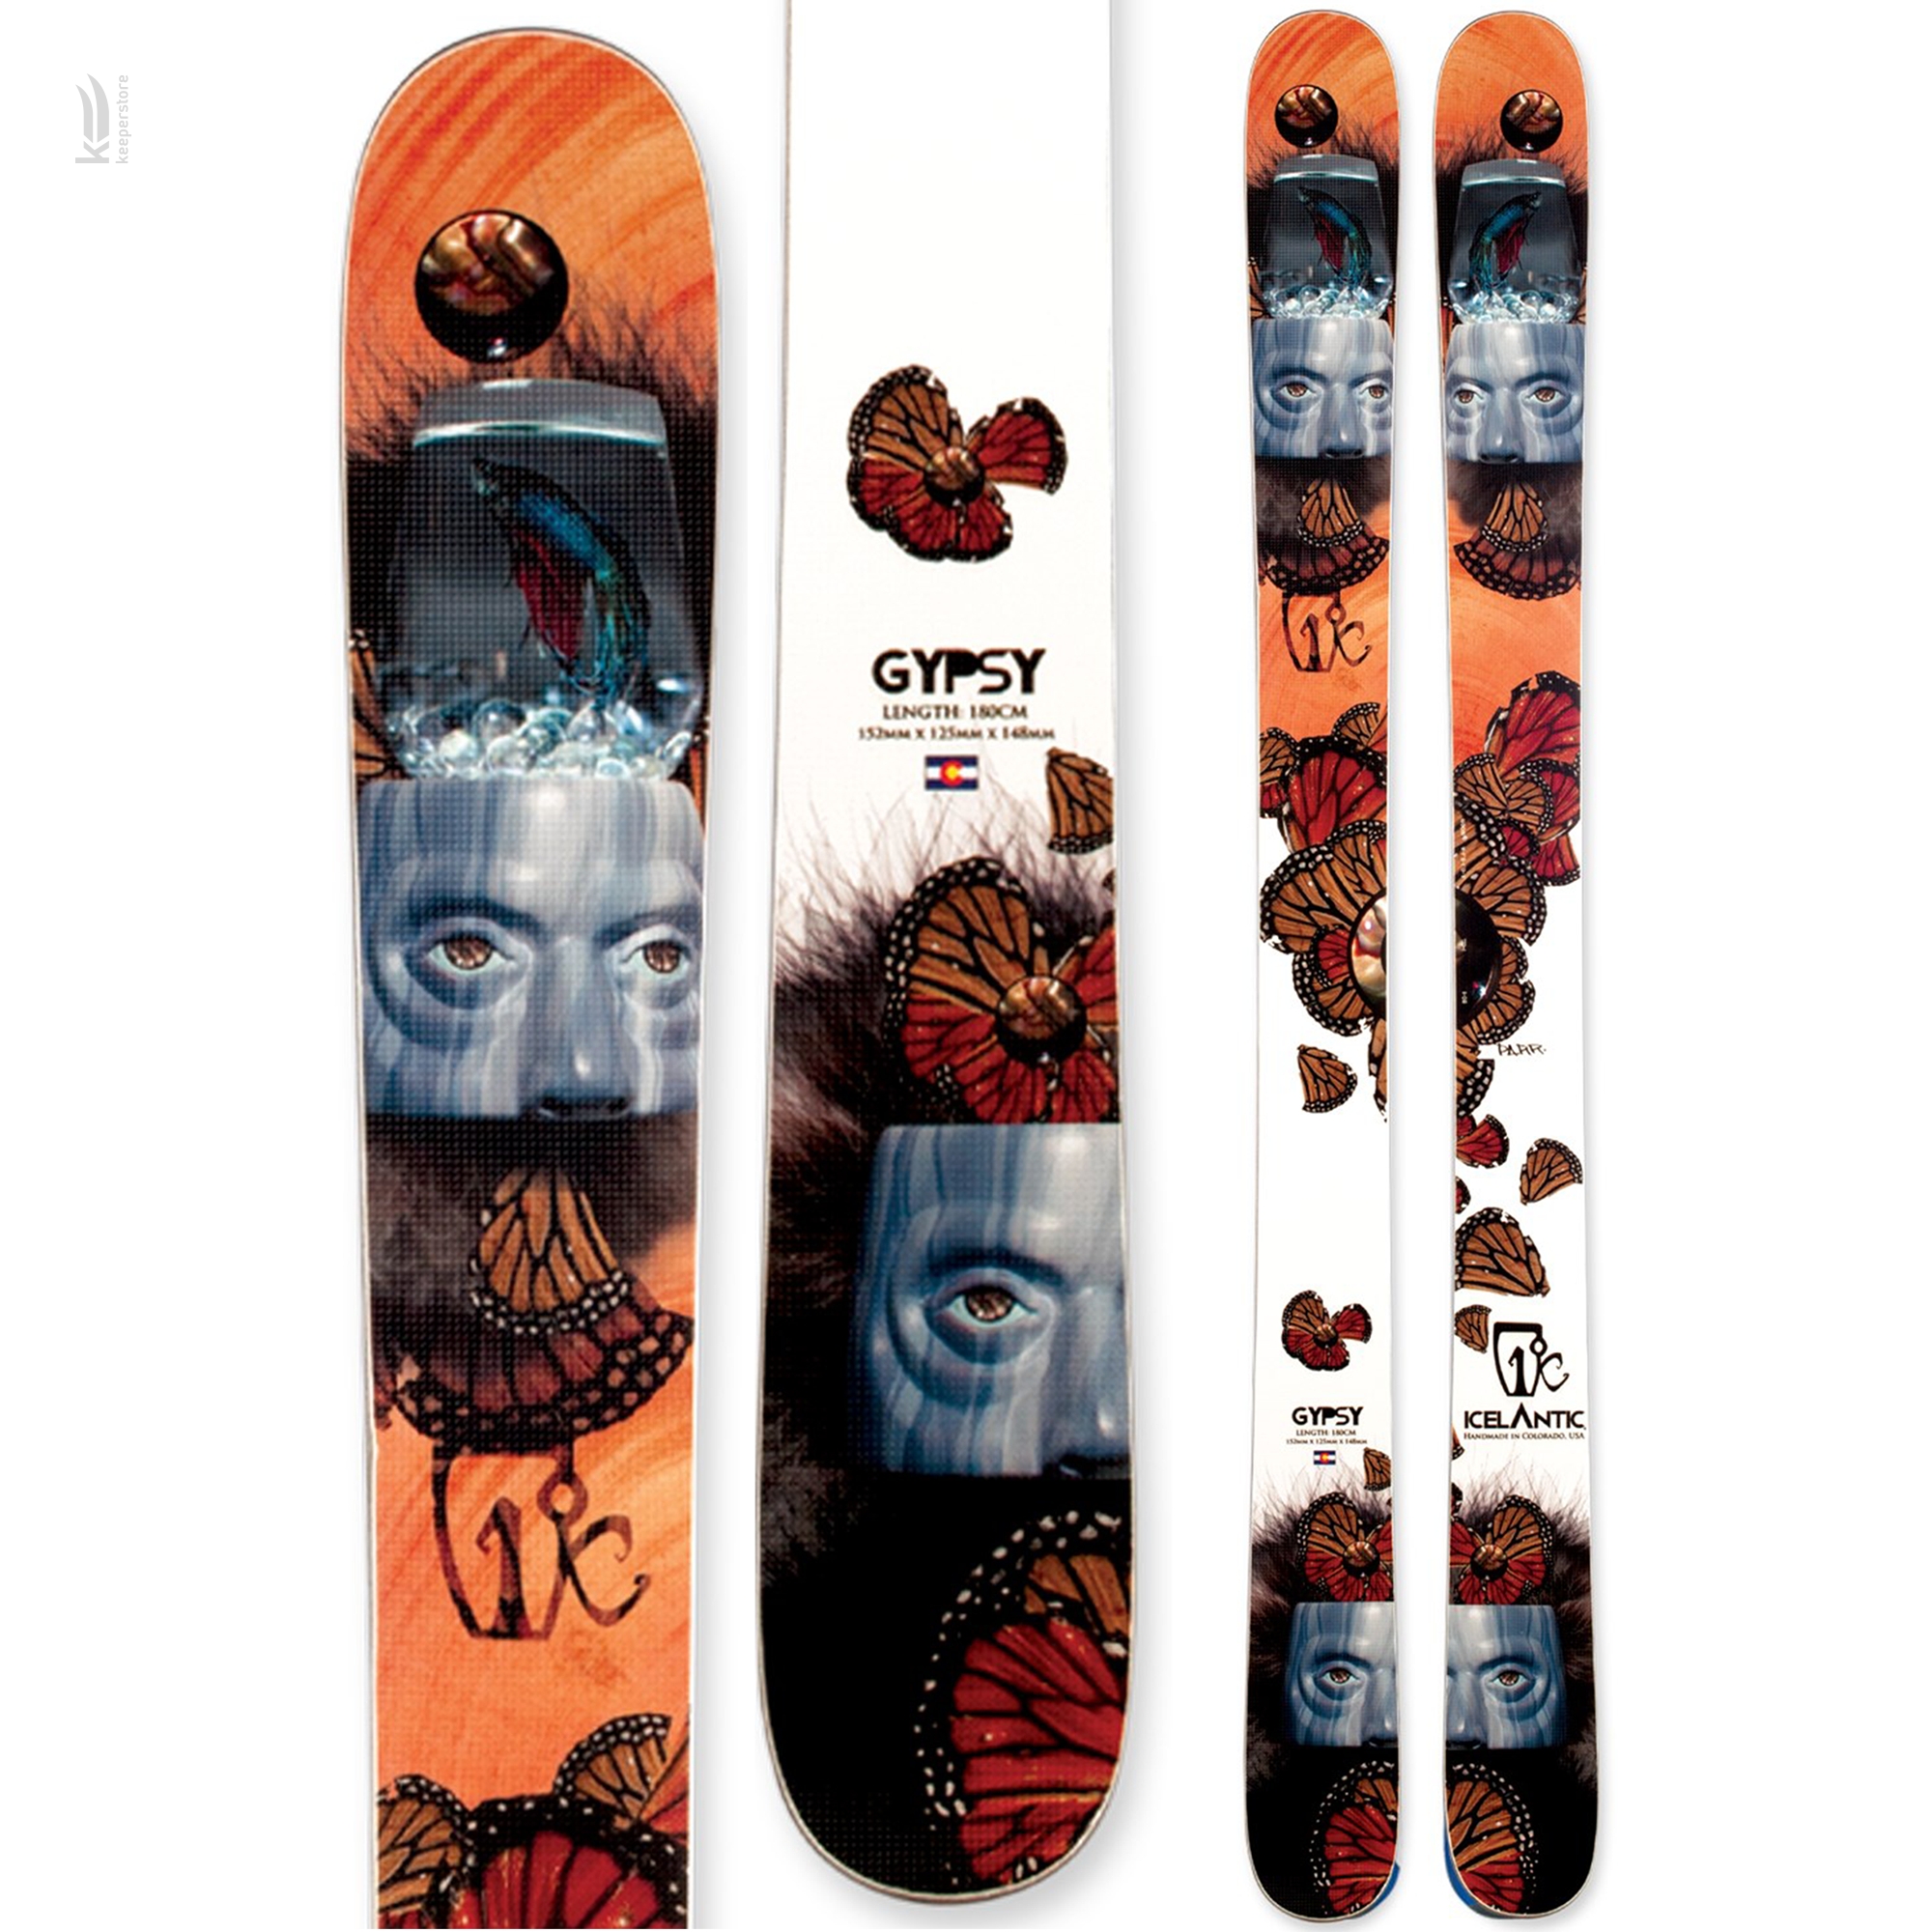 Лыжи для фрирайда Icelantic Gypsy 2013/2014 190cm